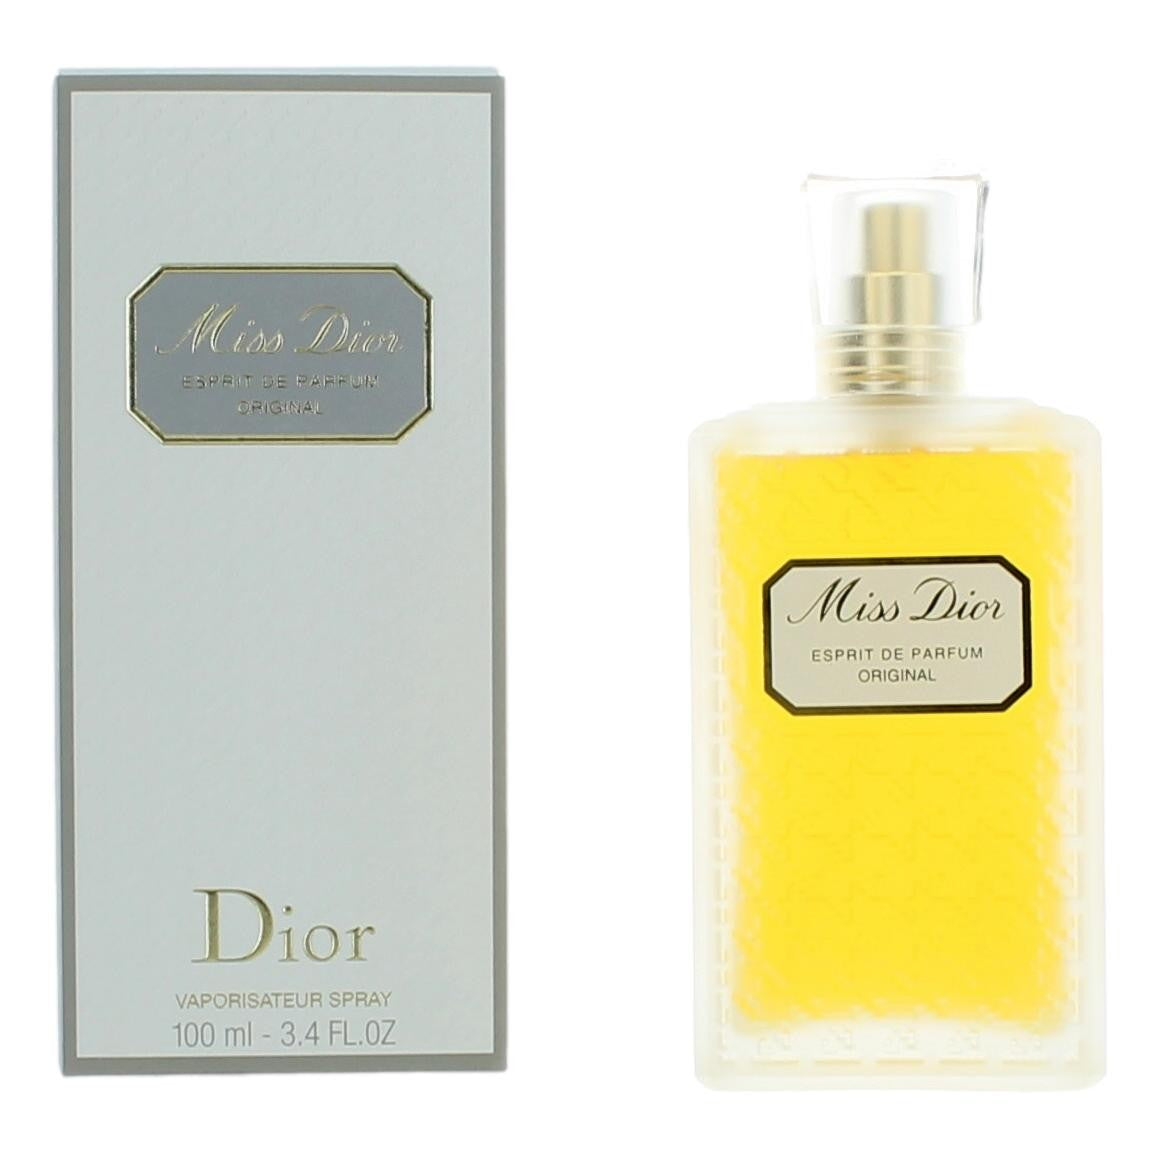 Bottle of Miss Dior by Christian Dior, 3.4 oz Esprit De Parfum Spray for Women